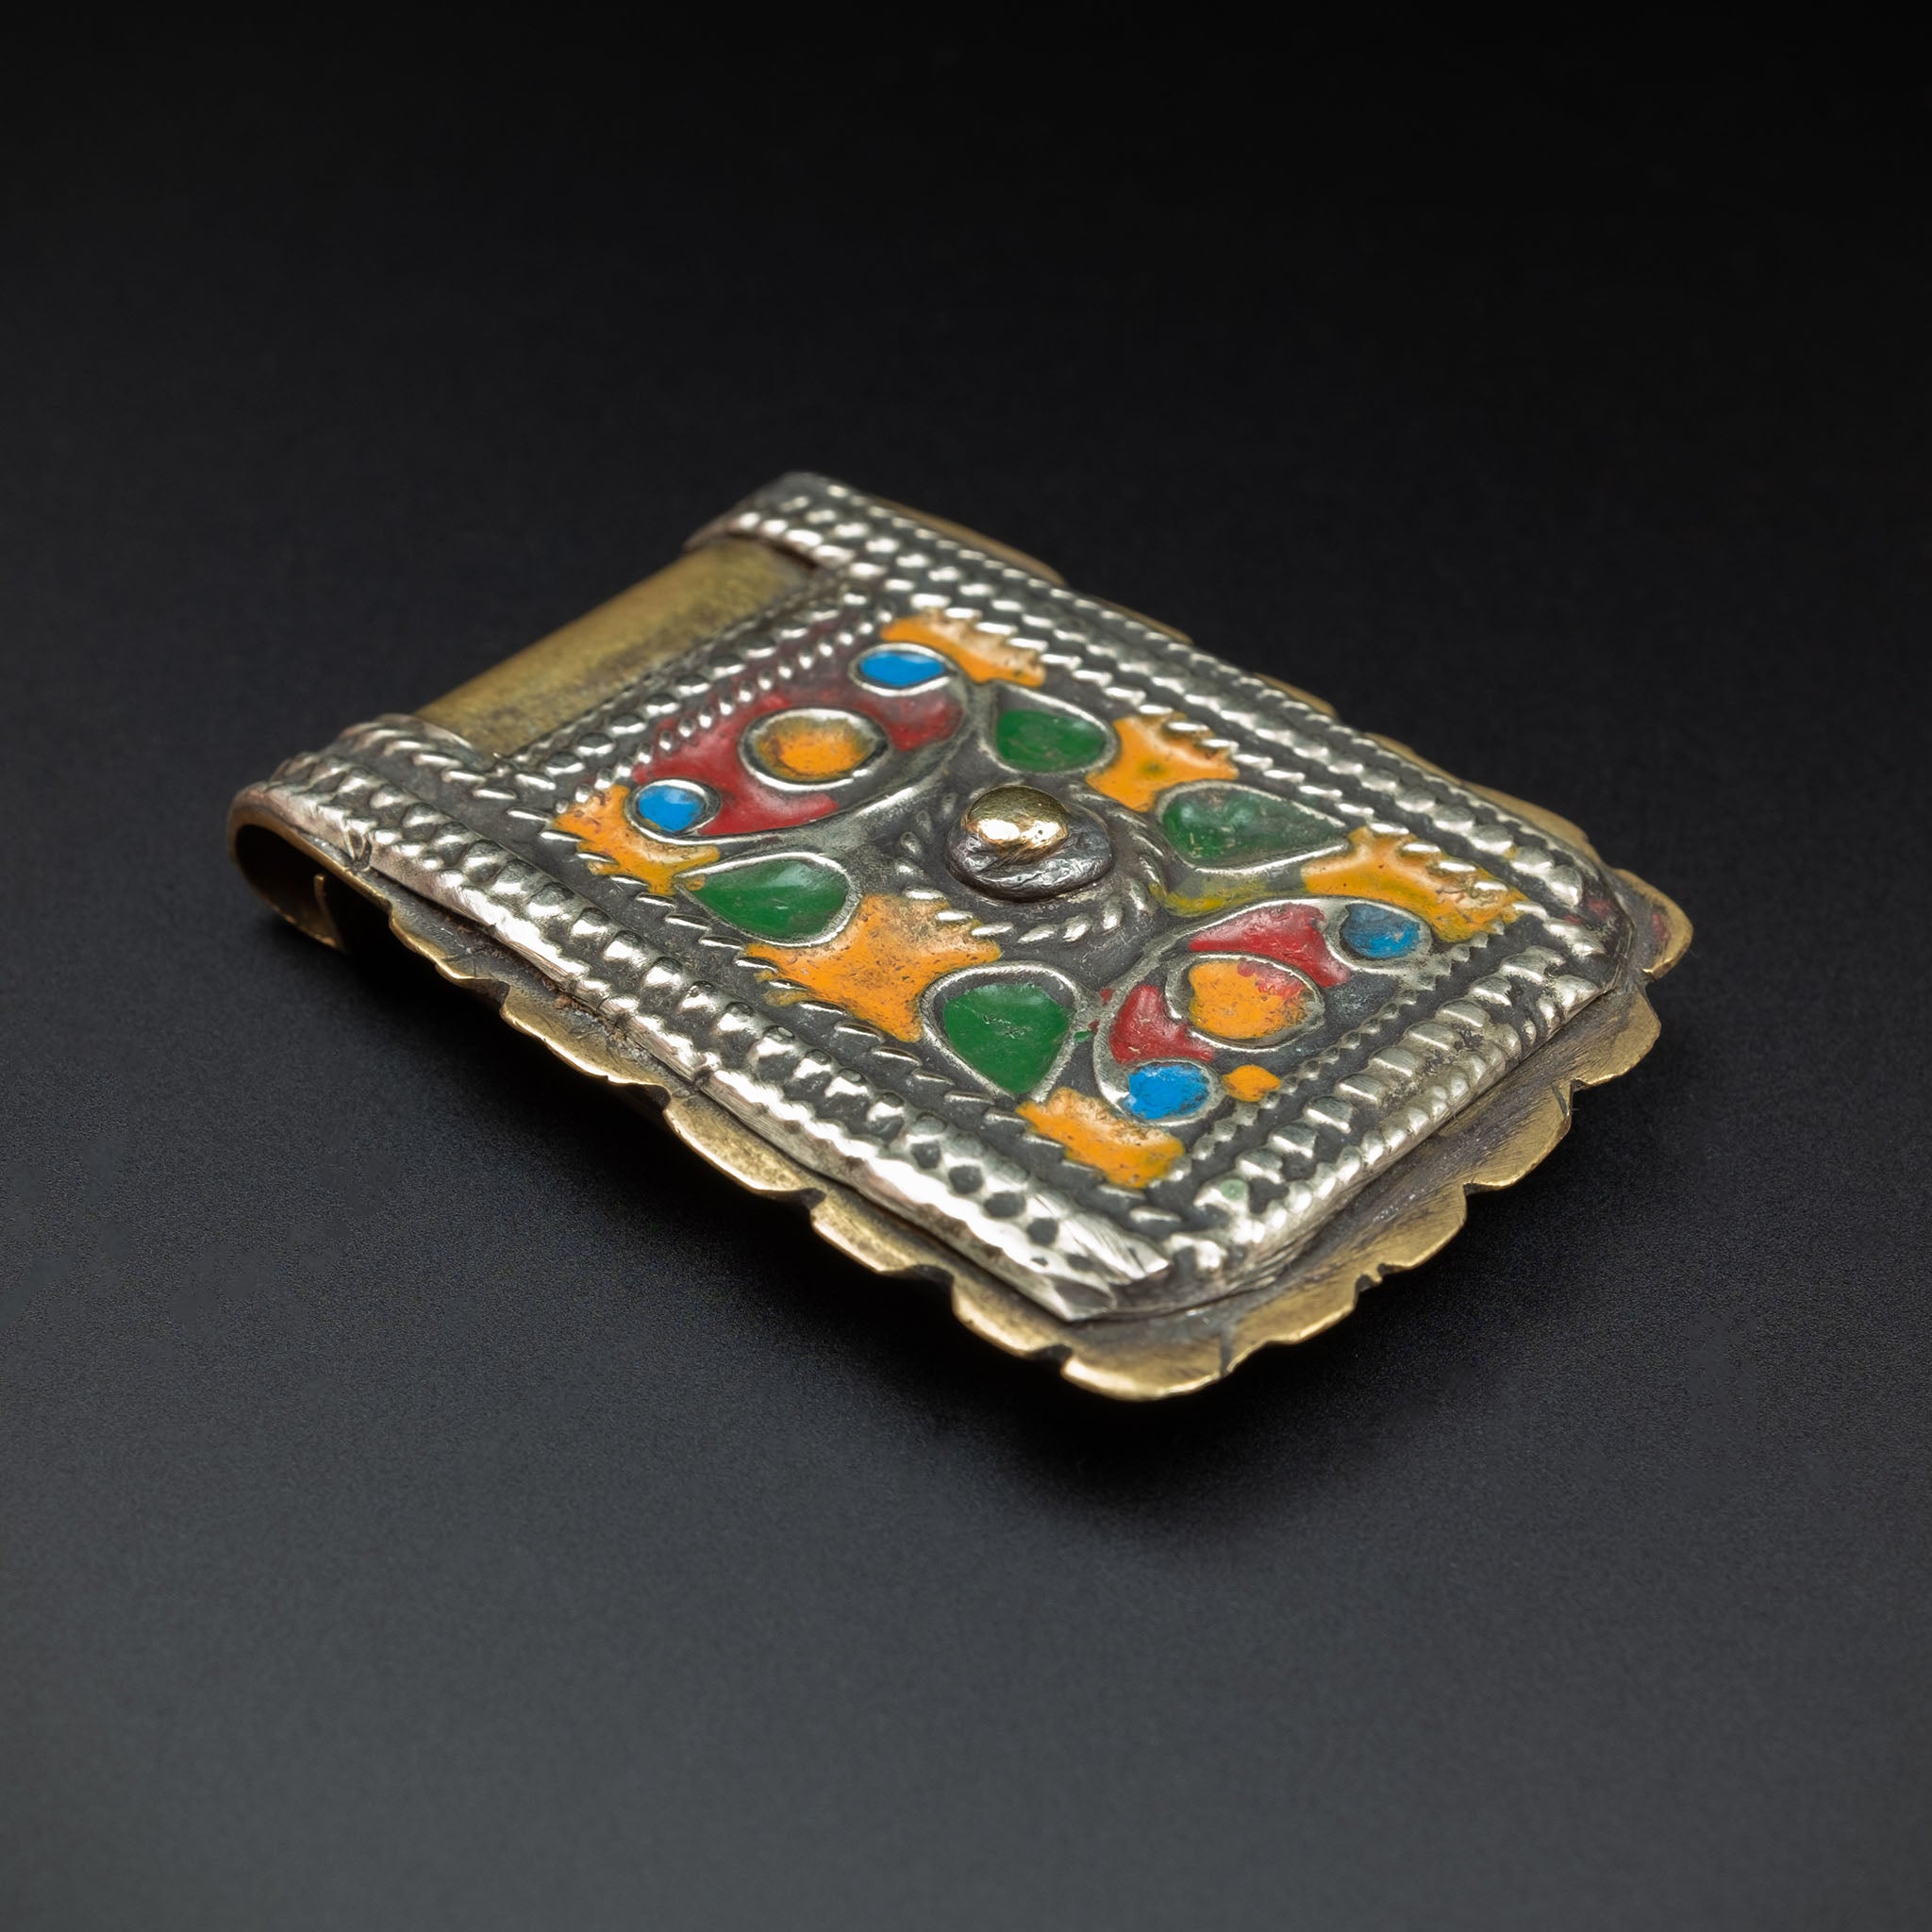 Brass and Enamel Kitab Amulet Pendant, Morocco